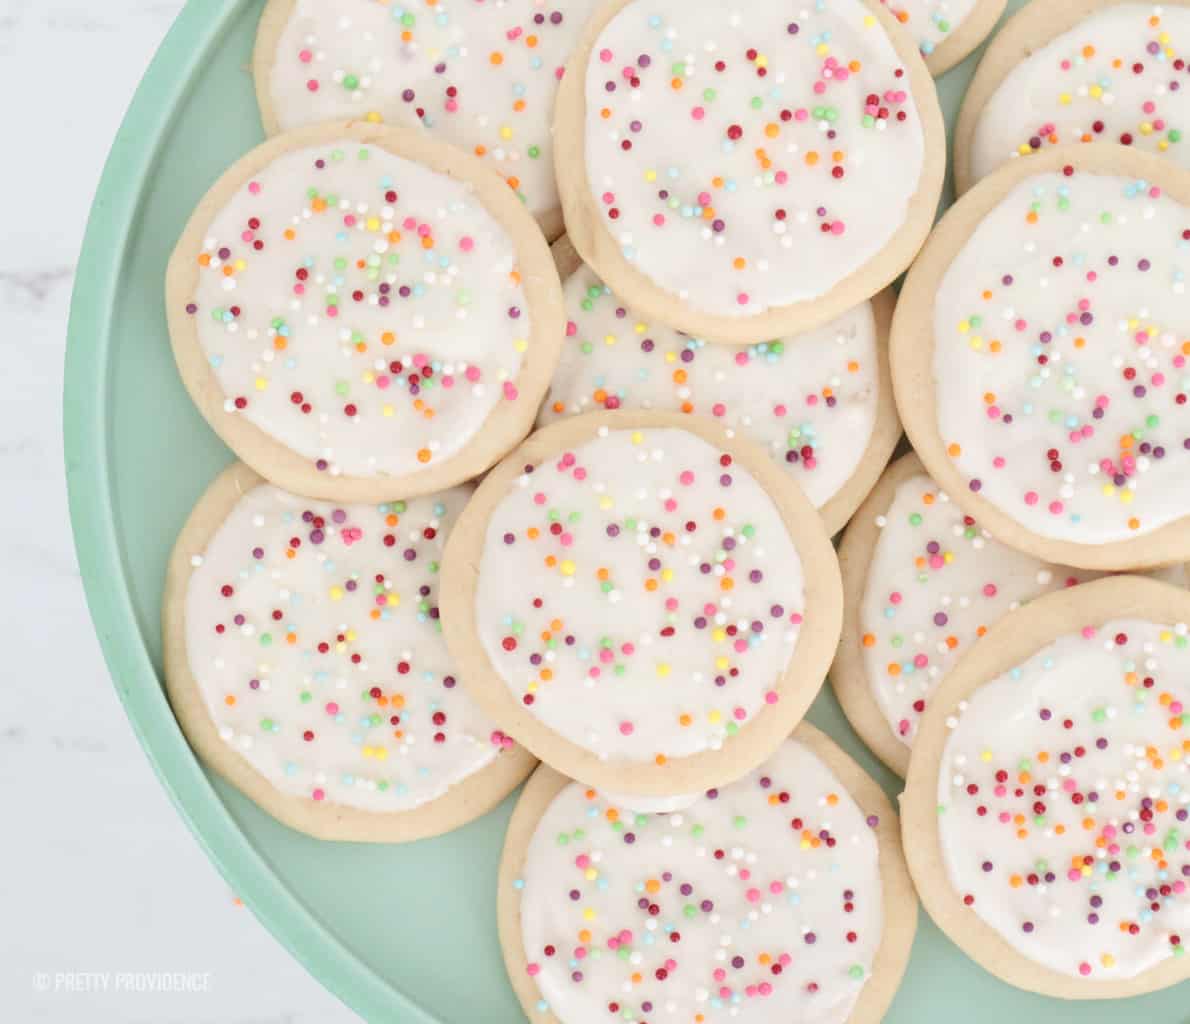 Homemade Sugar Cookies - Easy Recipe - Pretty Providence